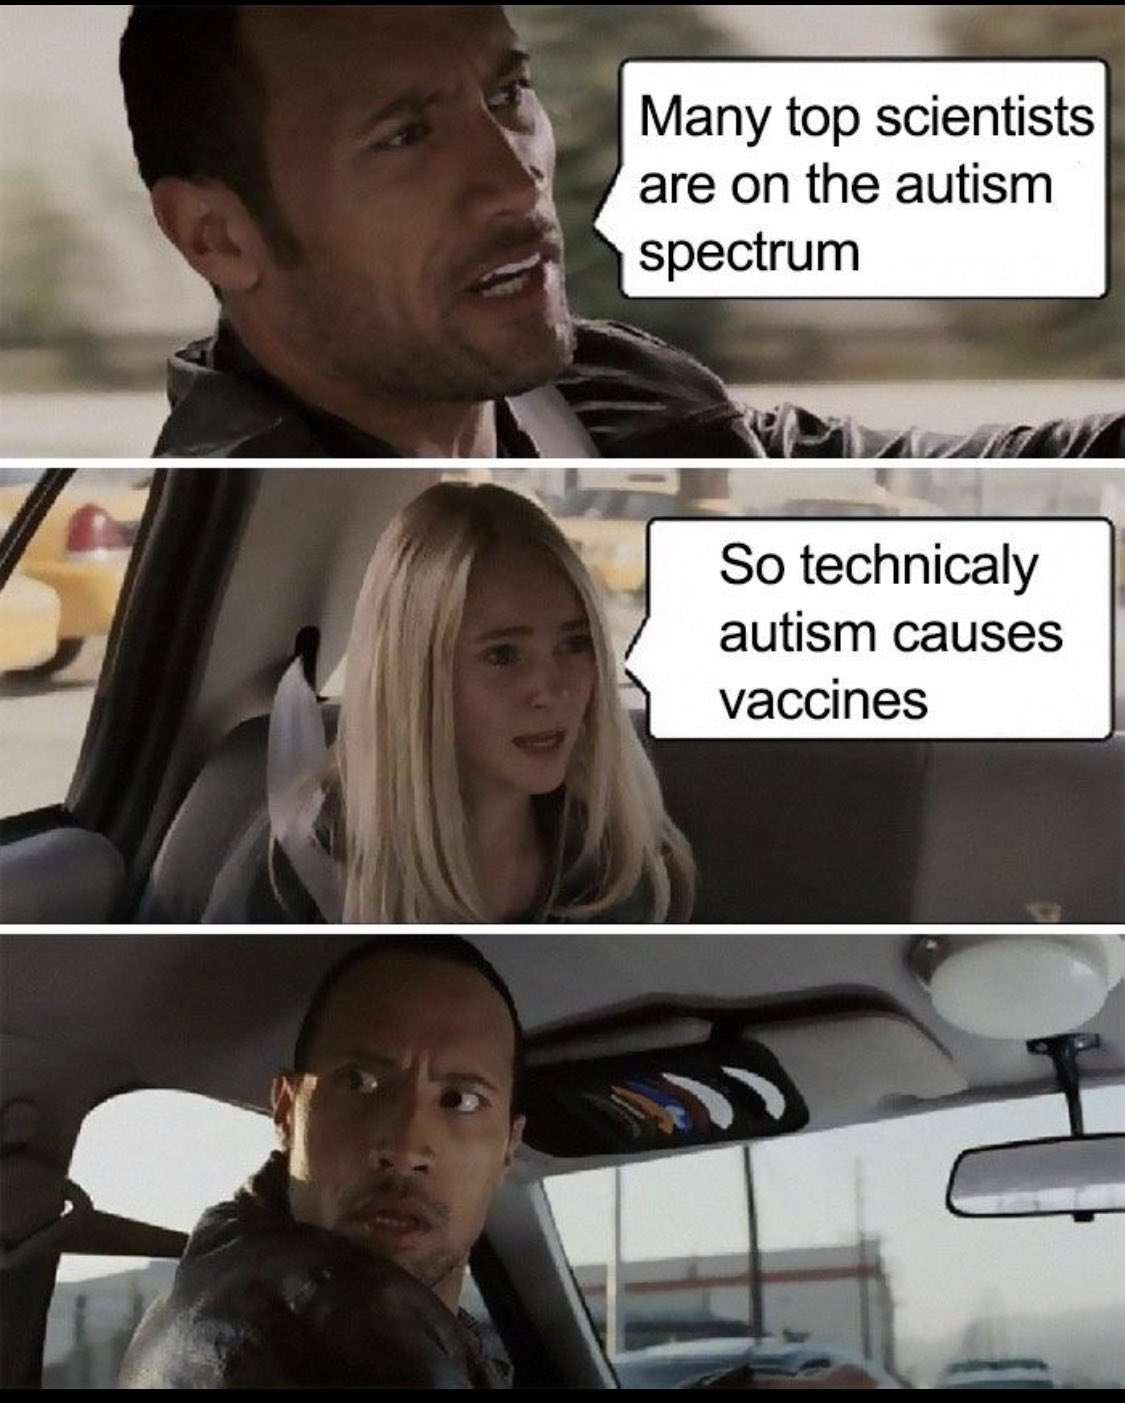 Vaccines don